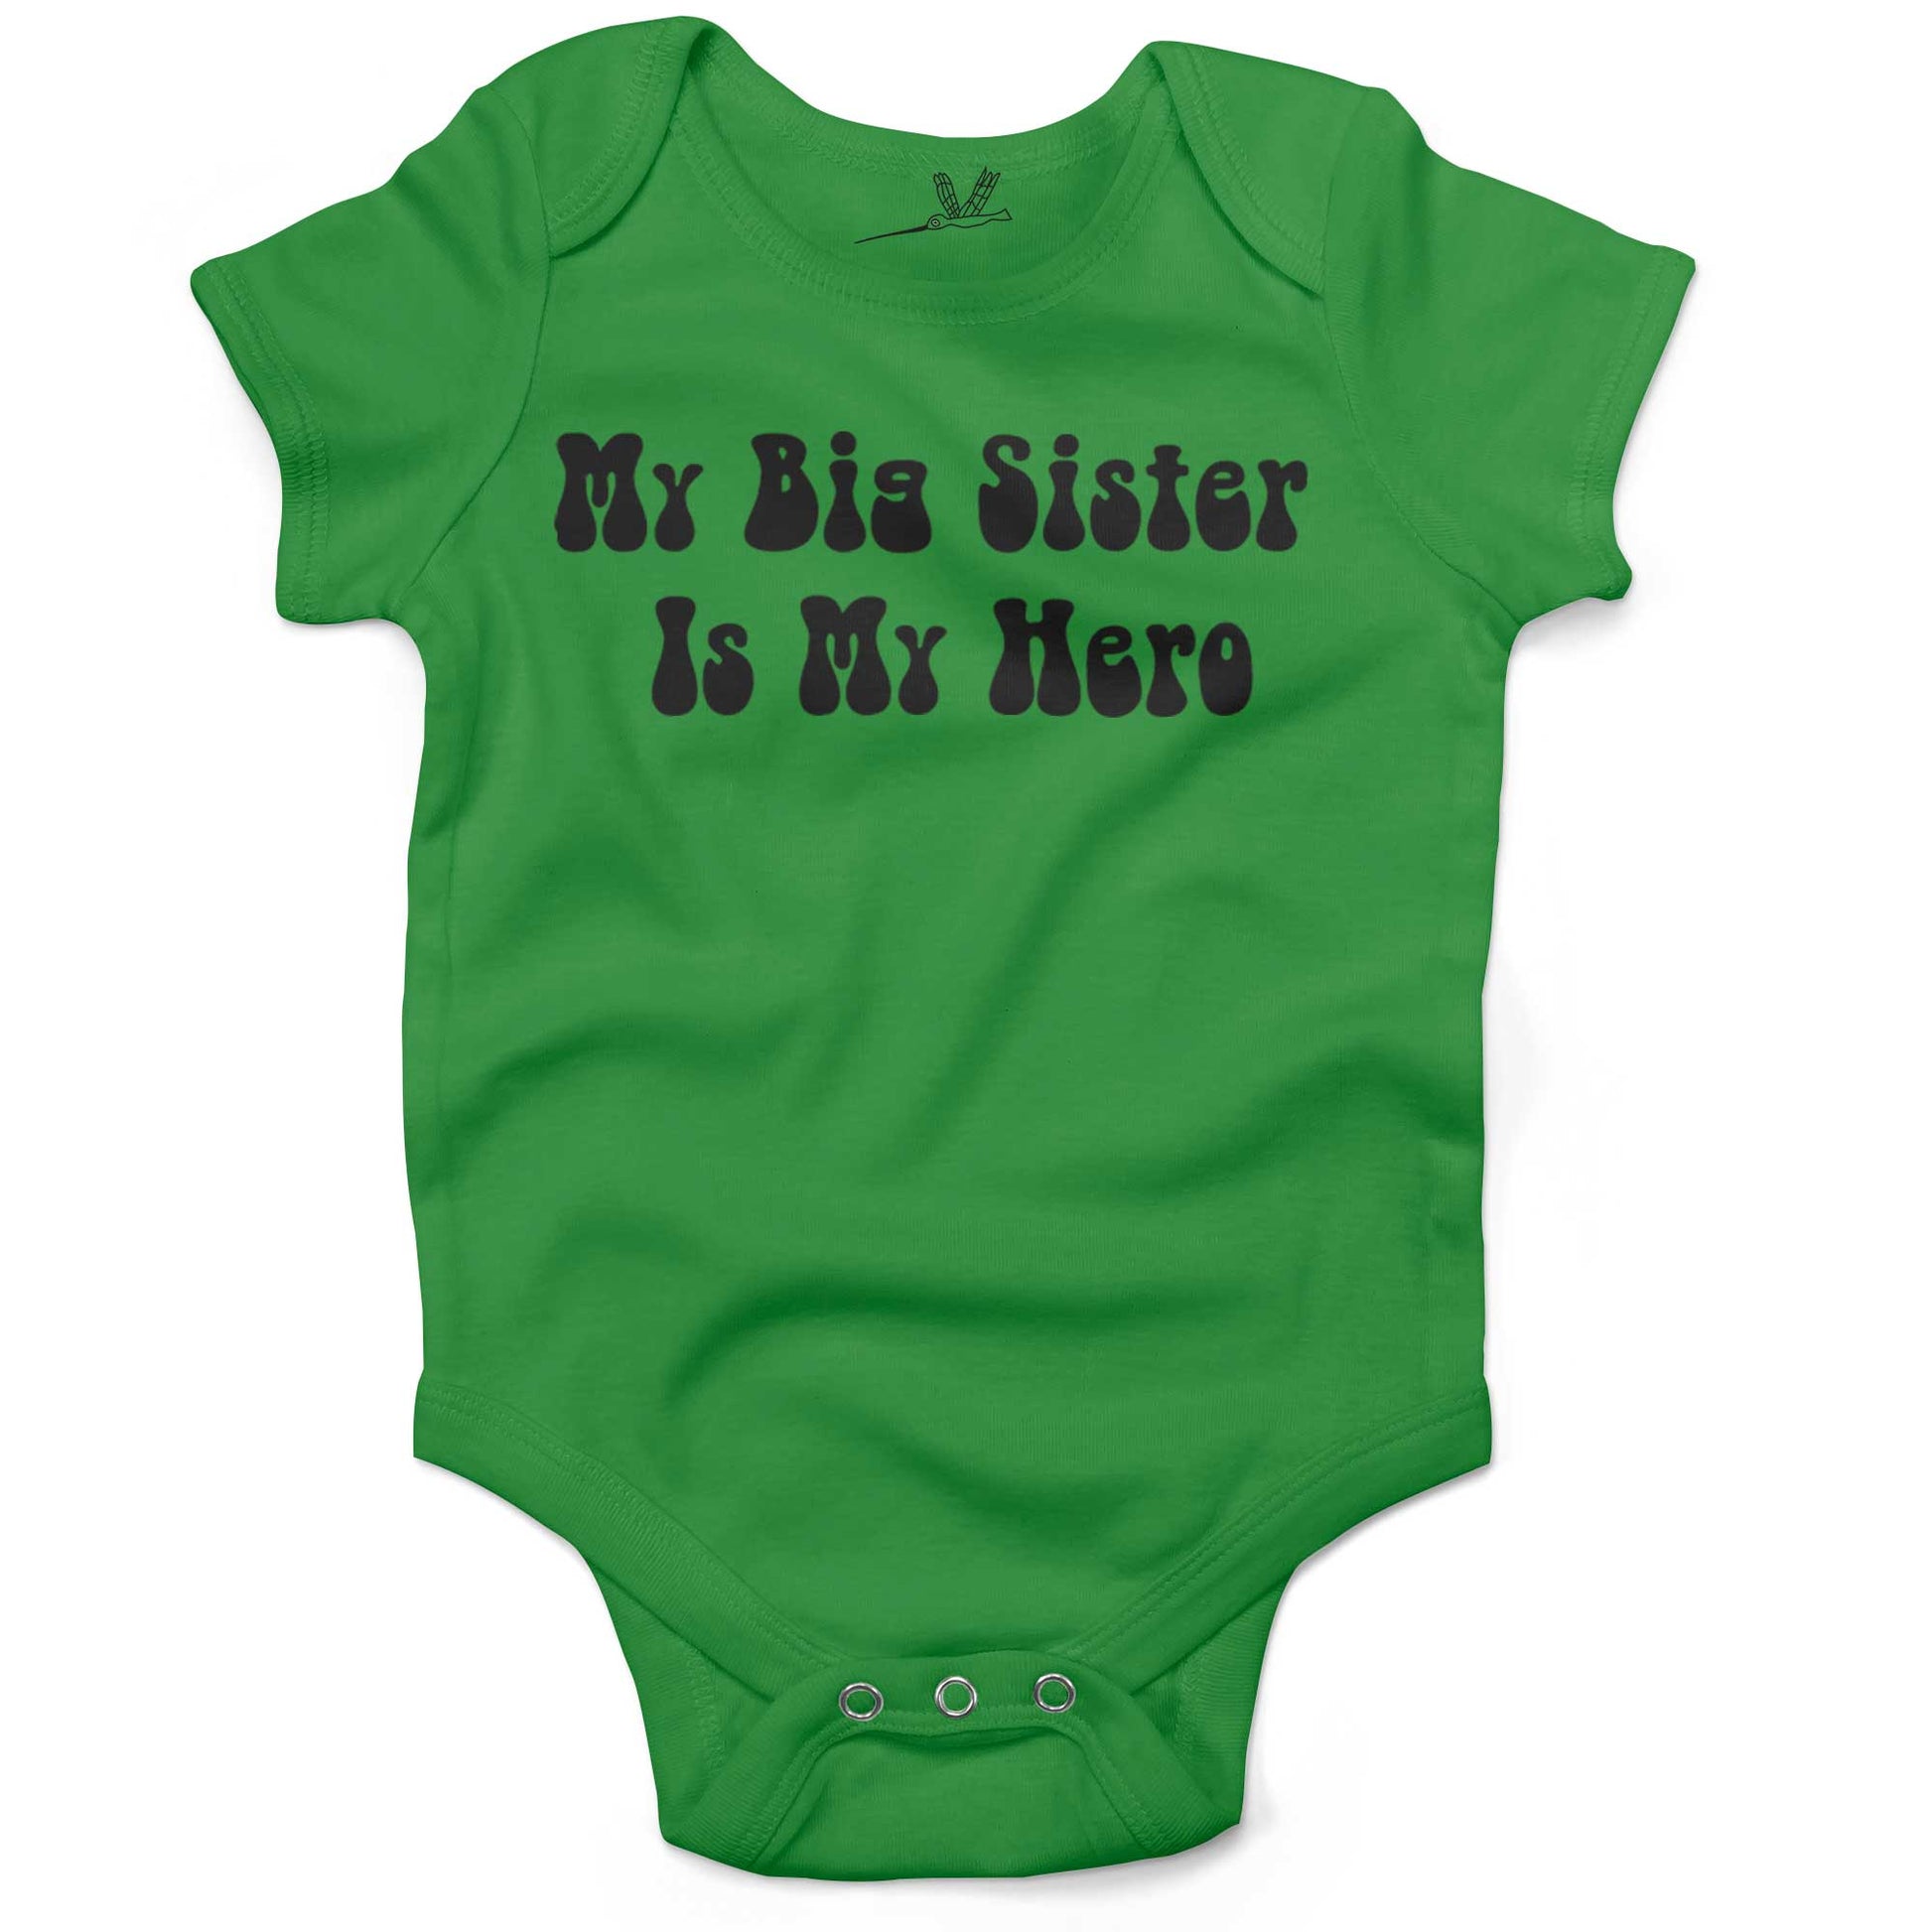 My Big Sister Is My Hero Infant Bodysuit or Raglan Tee-Grass Green-3-6 months